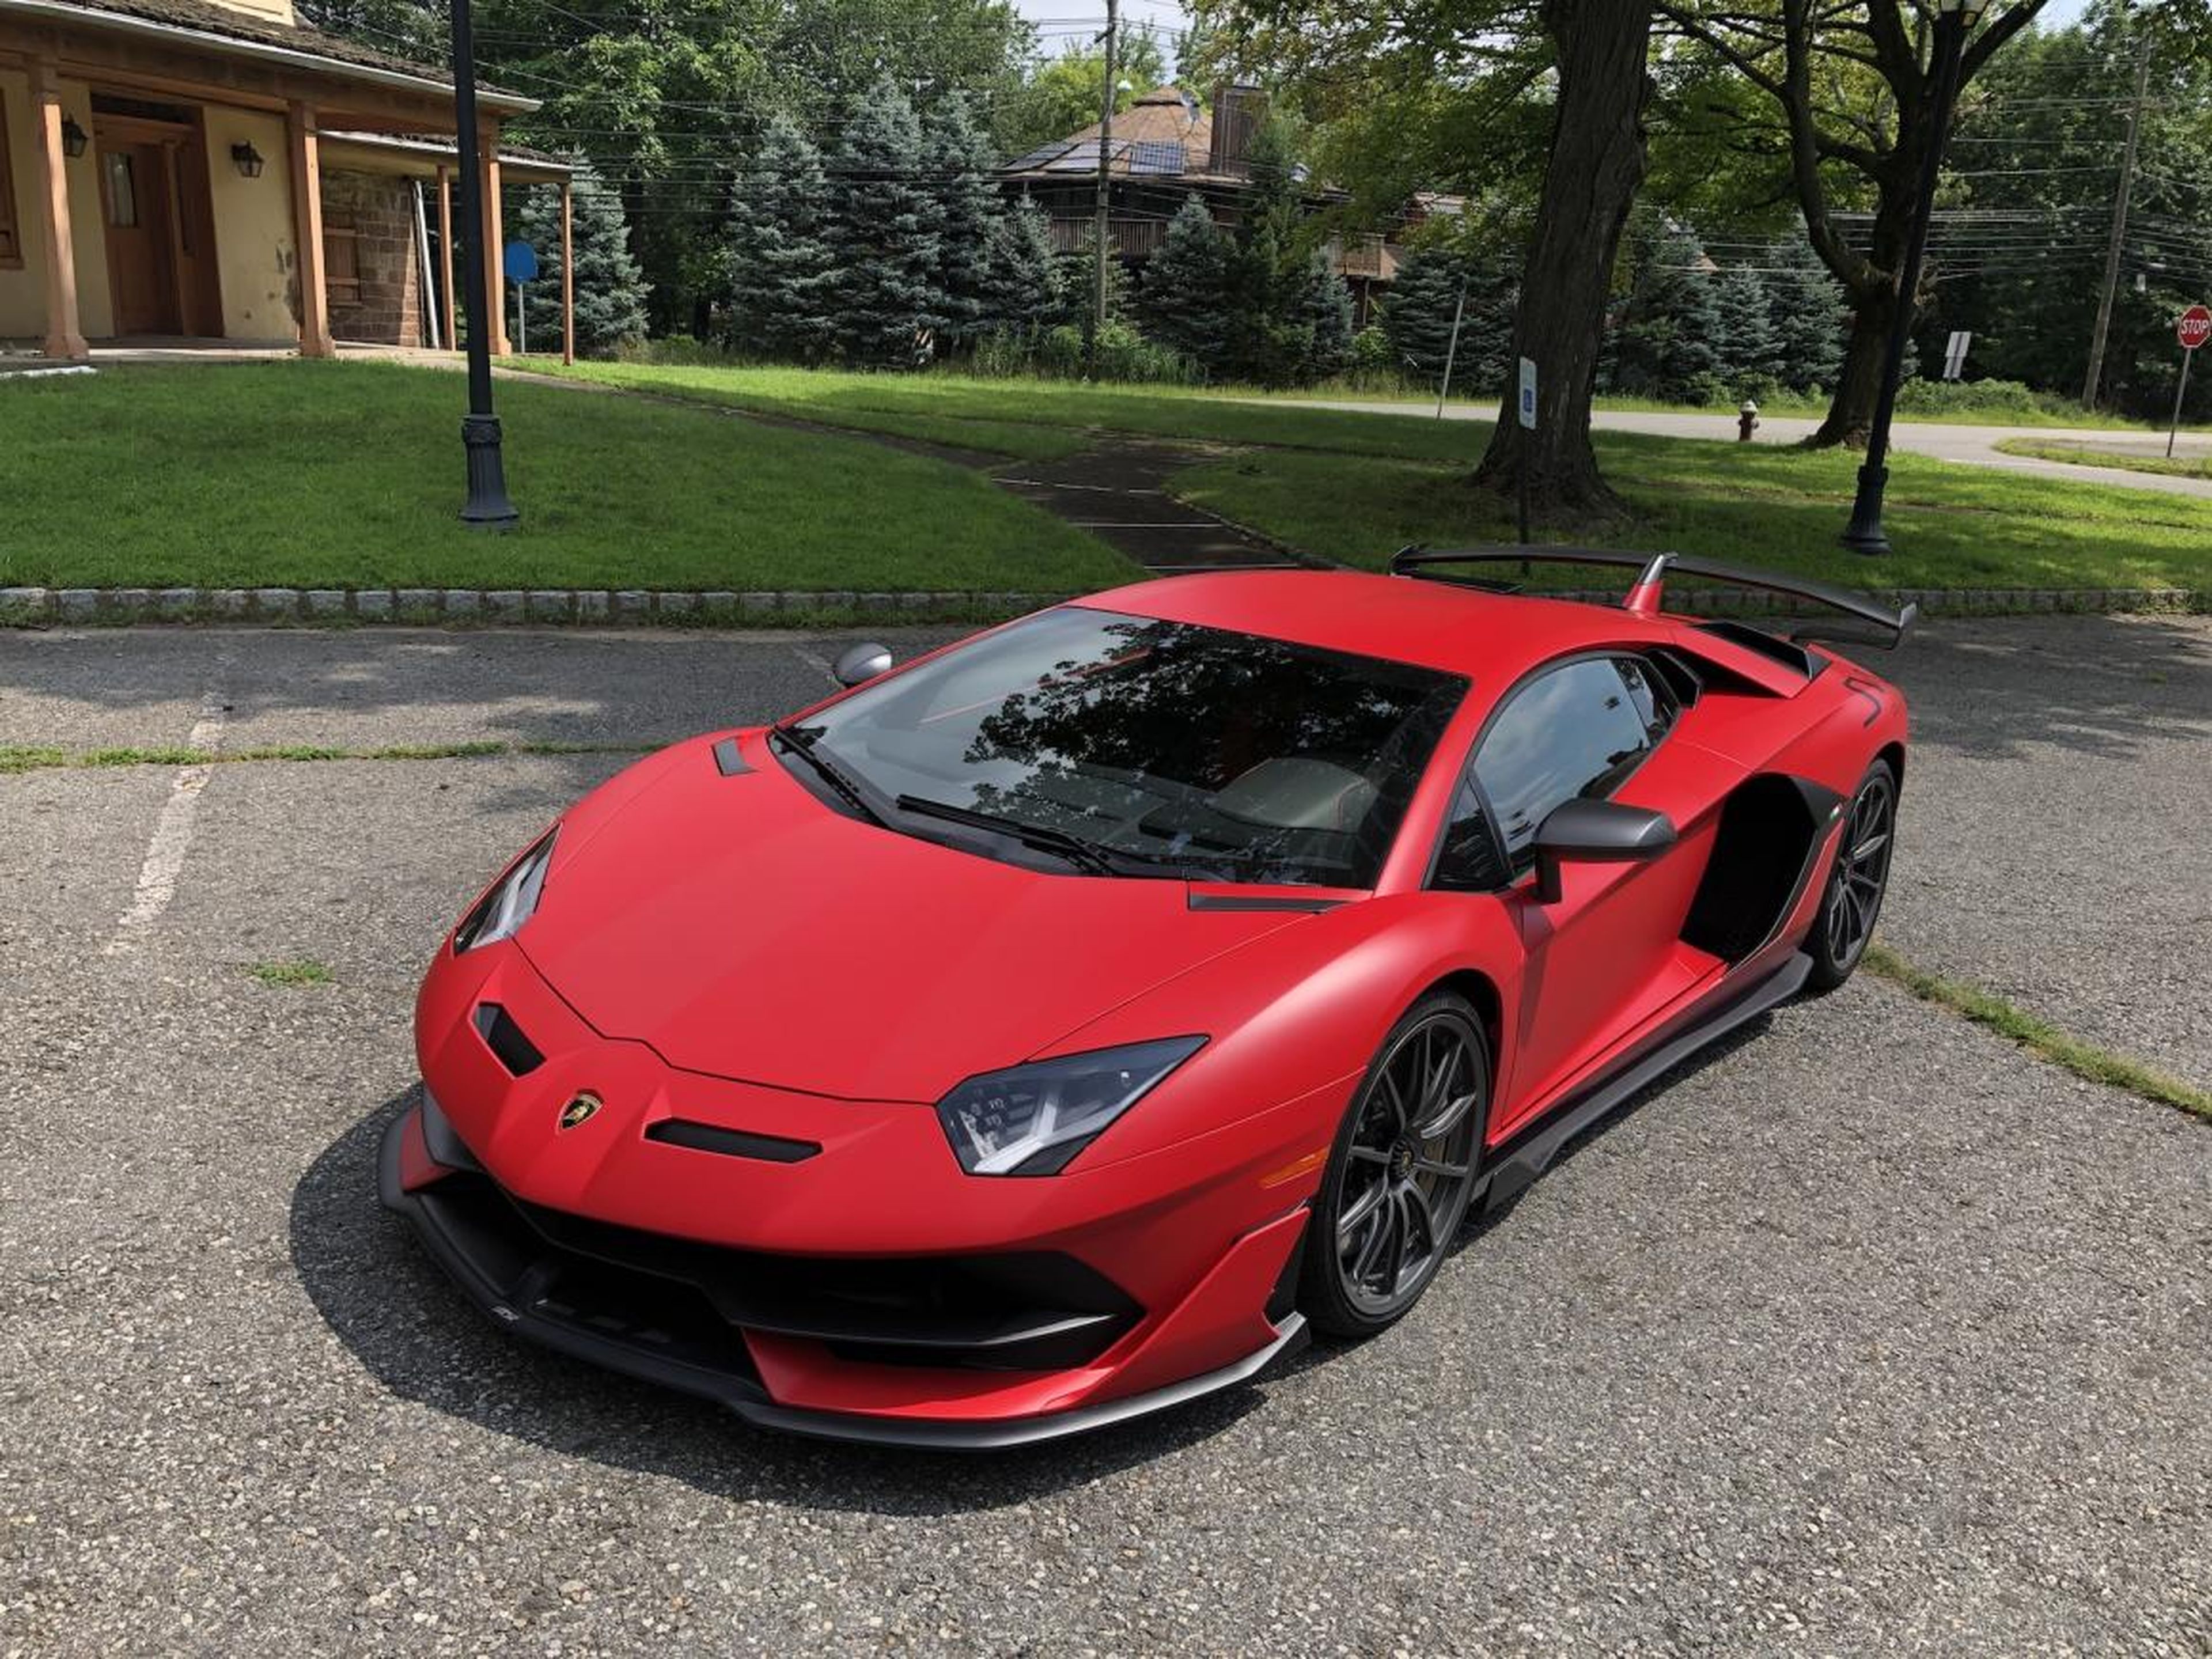 Saluda a mi Lamborghini Aventador SVJ, en color "rosso mimir", un rojo mate.